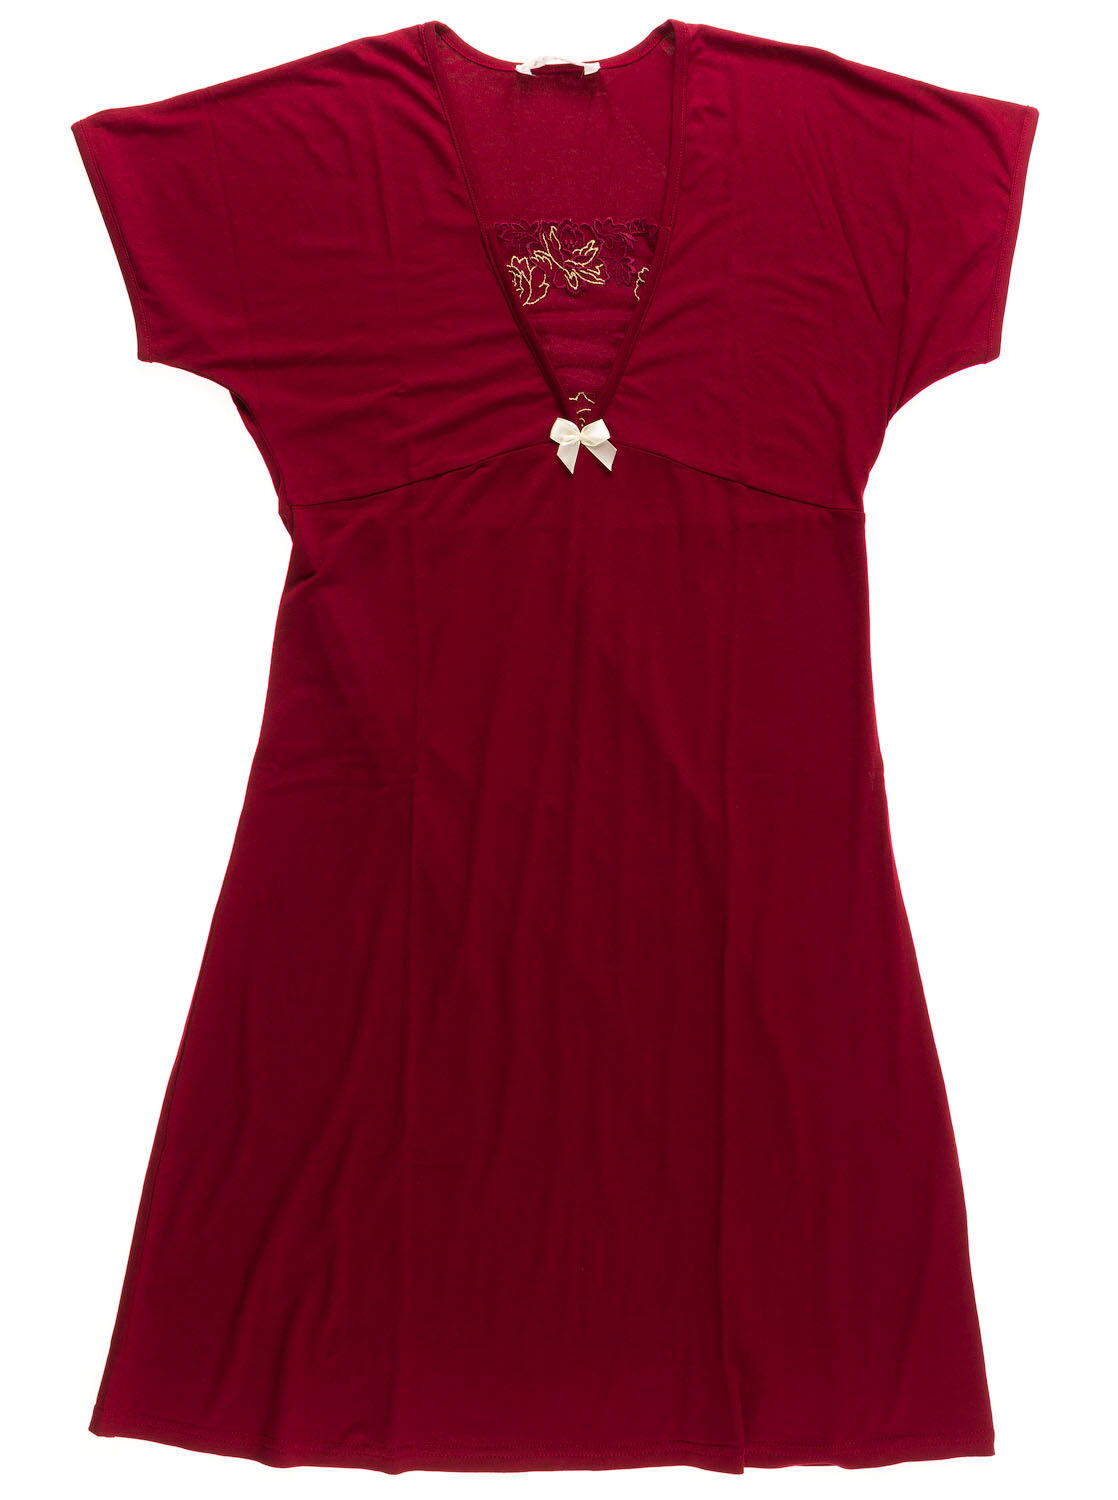 Сорочка женская VVL бордо 422-1 - цена